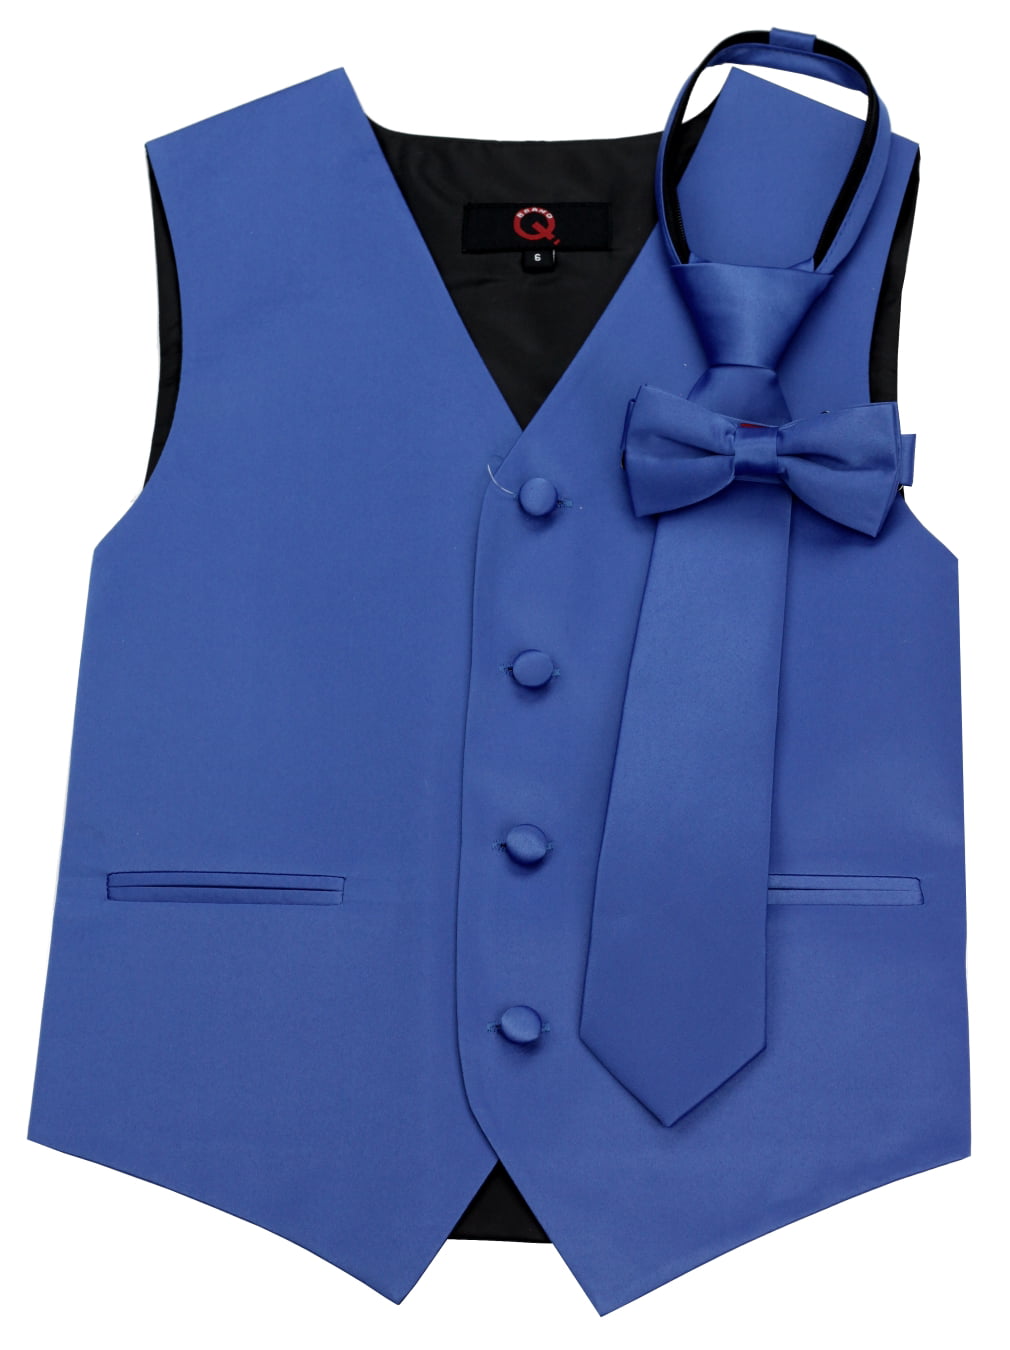 Zipper Tie & Bow-Tie Set in Royal Blue Brand Q Boy's Tuxedo Vest 